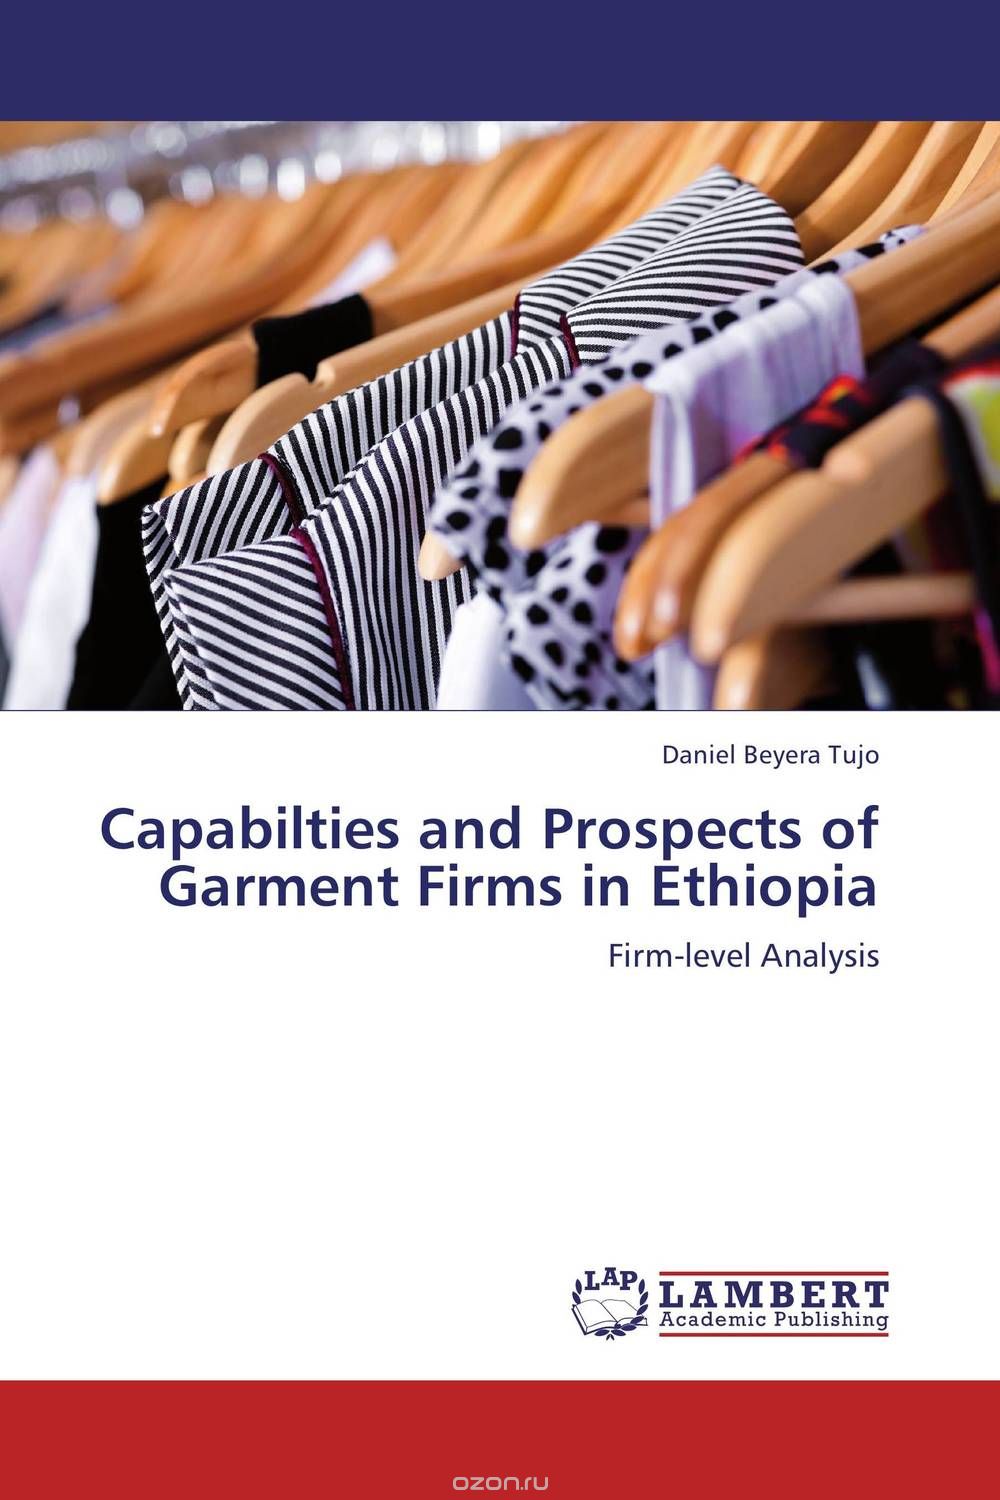 Скачать книгу "Capabilties and Prospects of Garment Firms in Ethiopia"